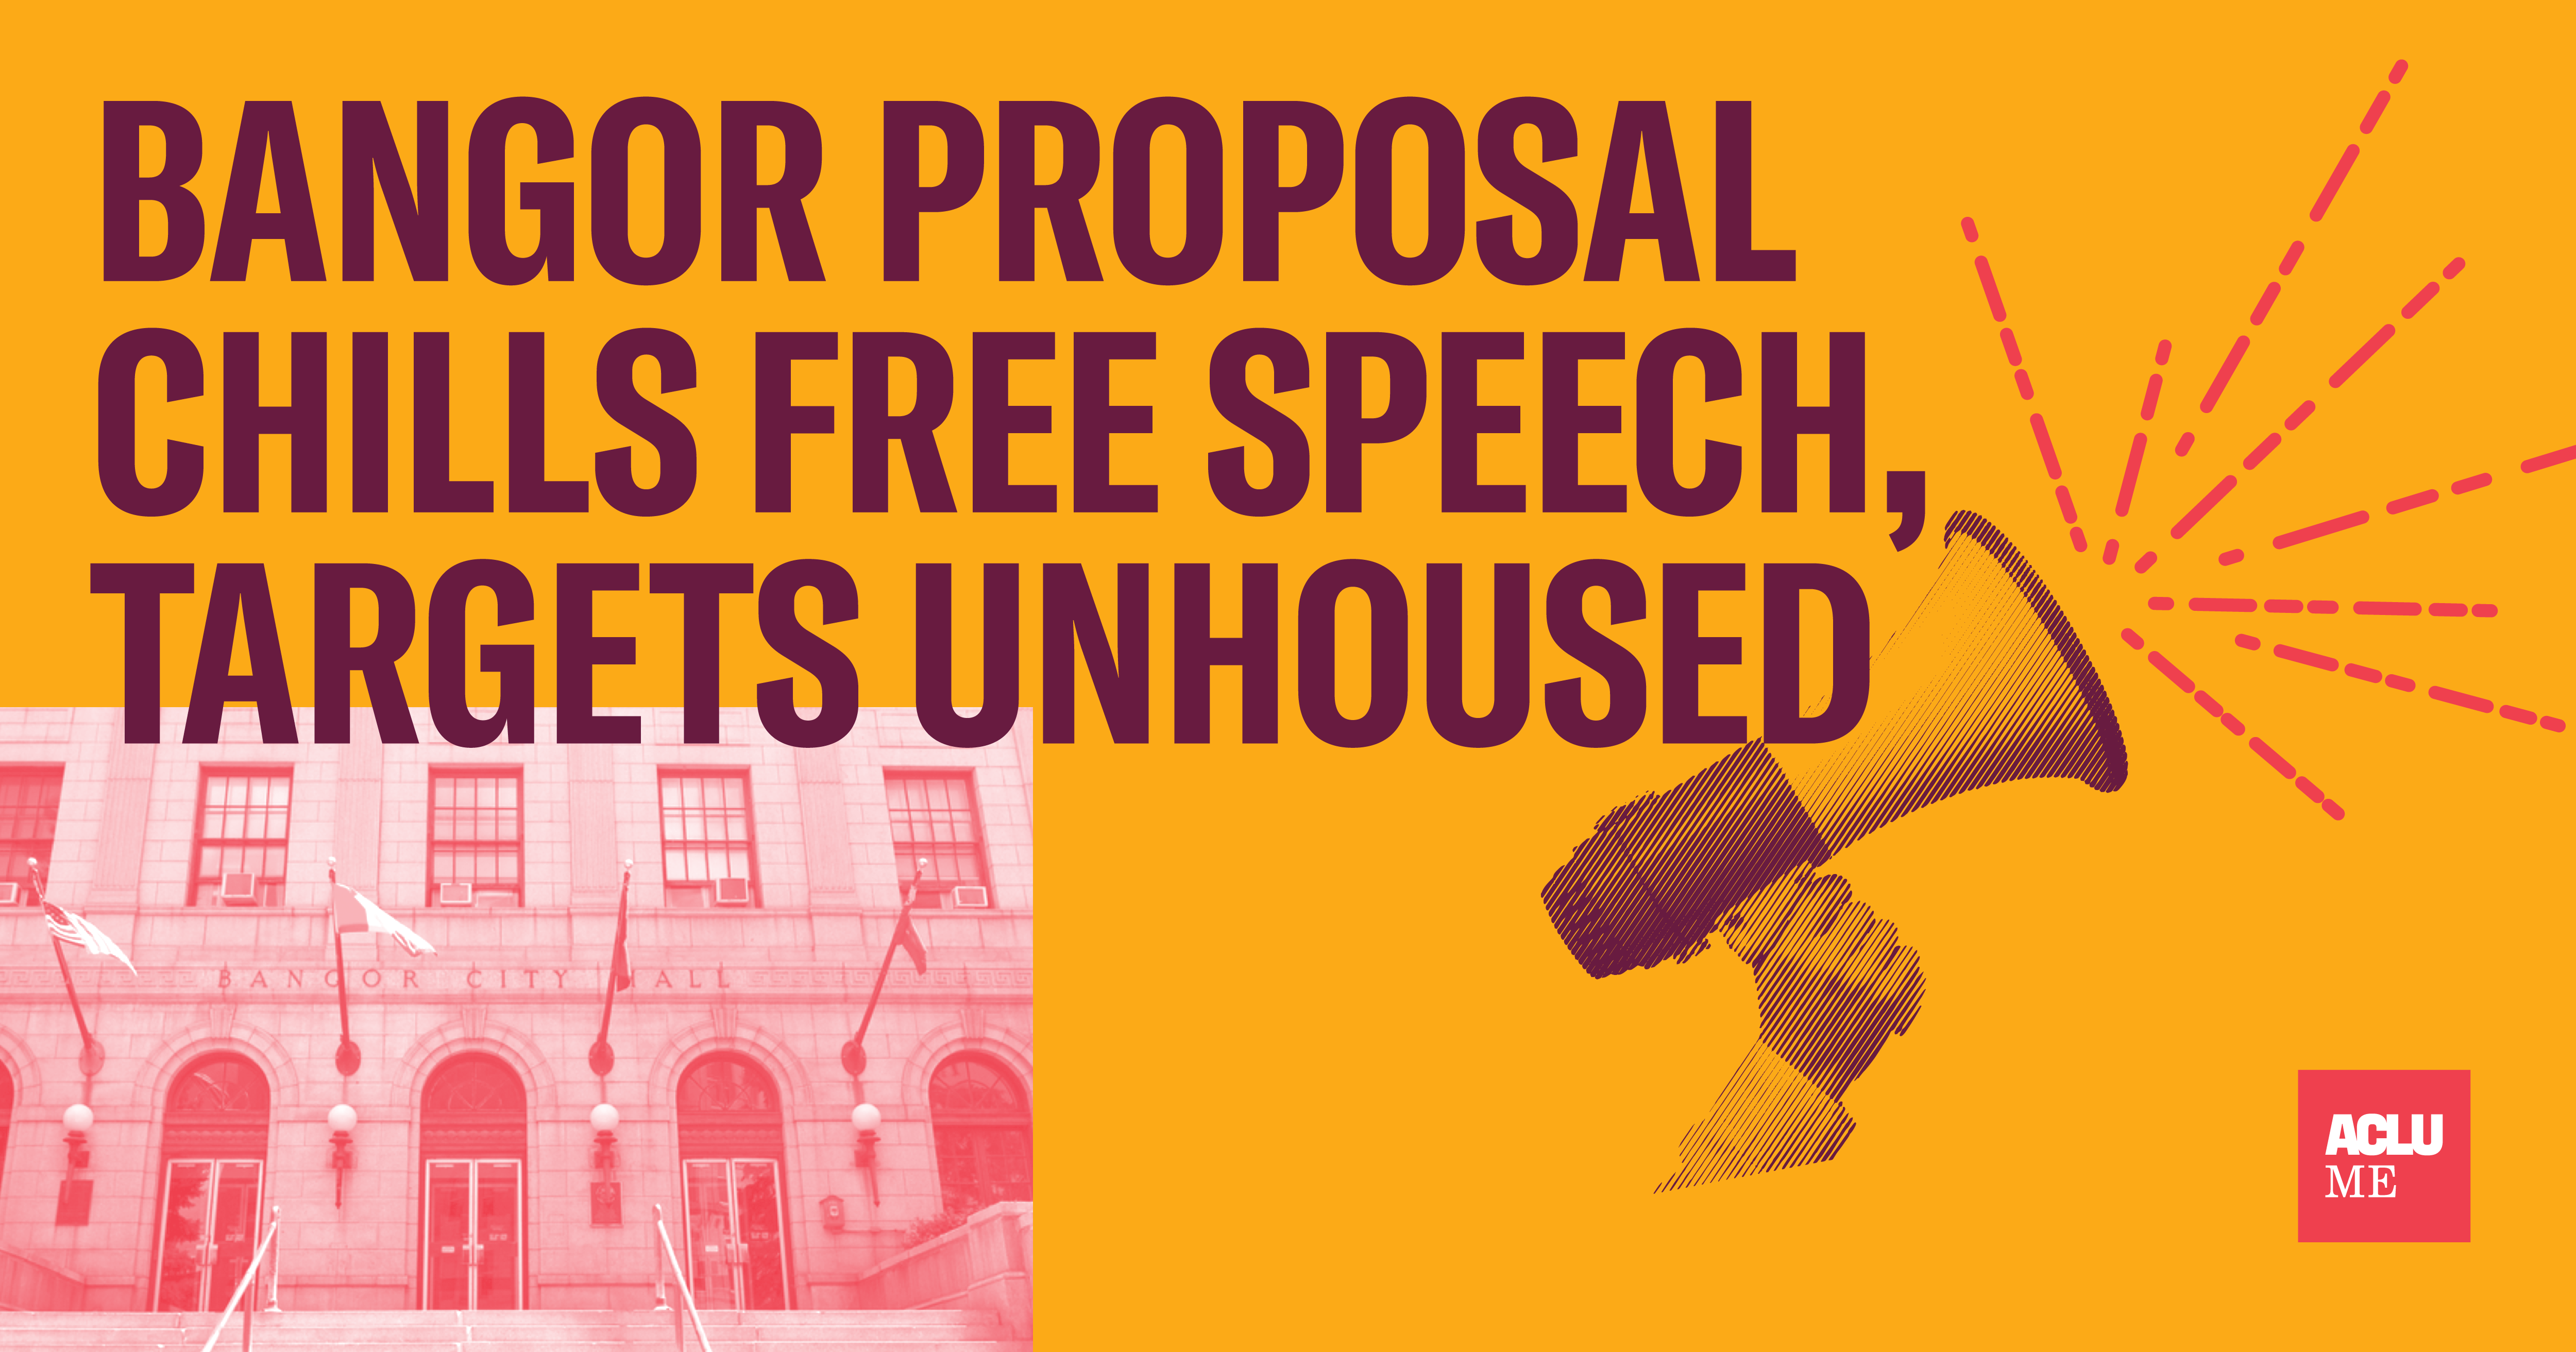 Bangor proposal chills free speech, targets unhoused.